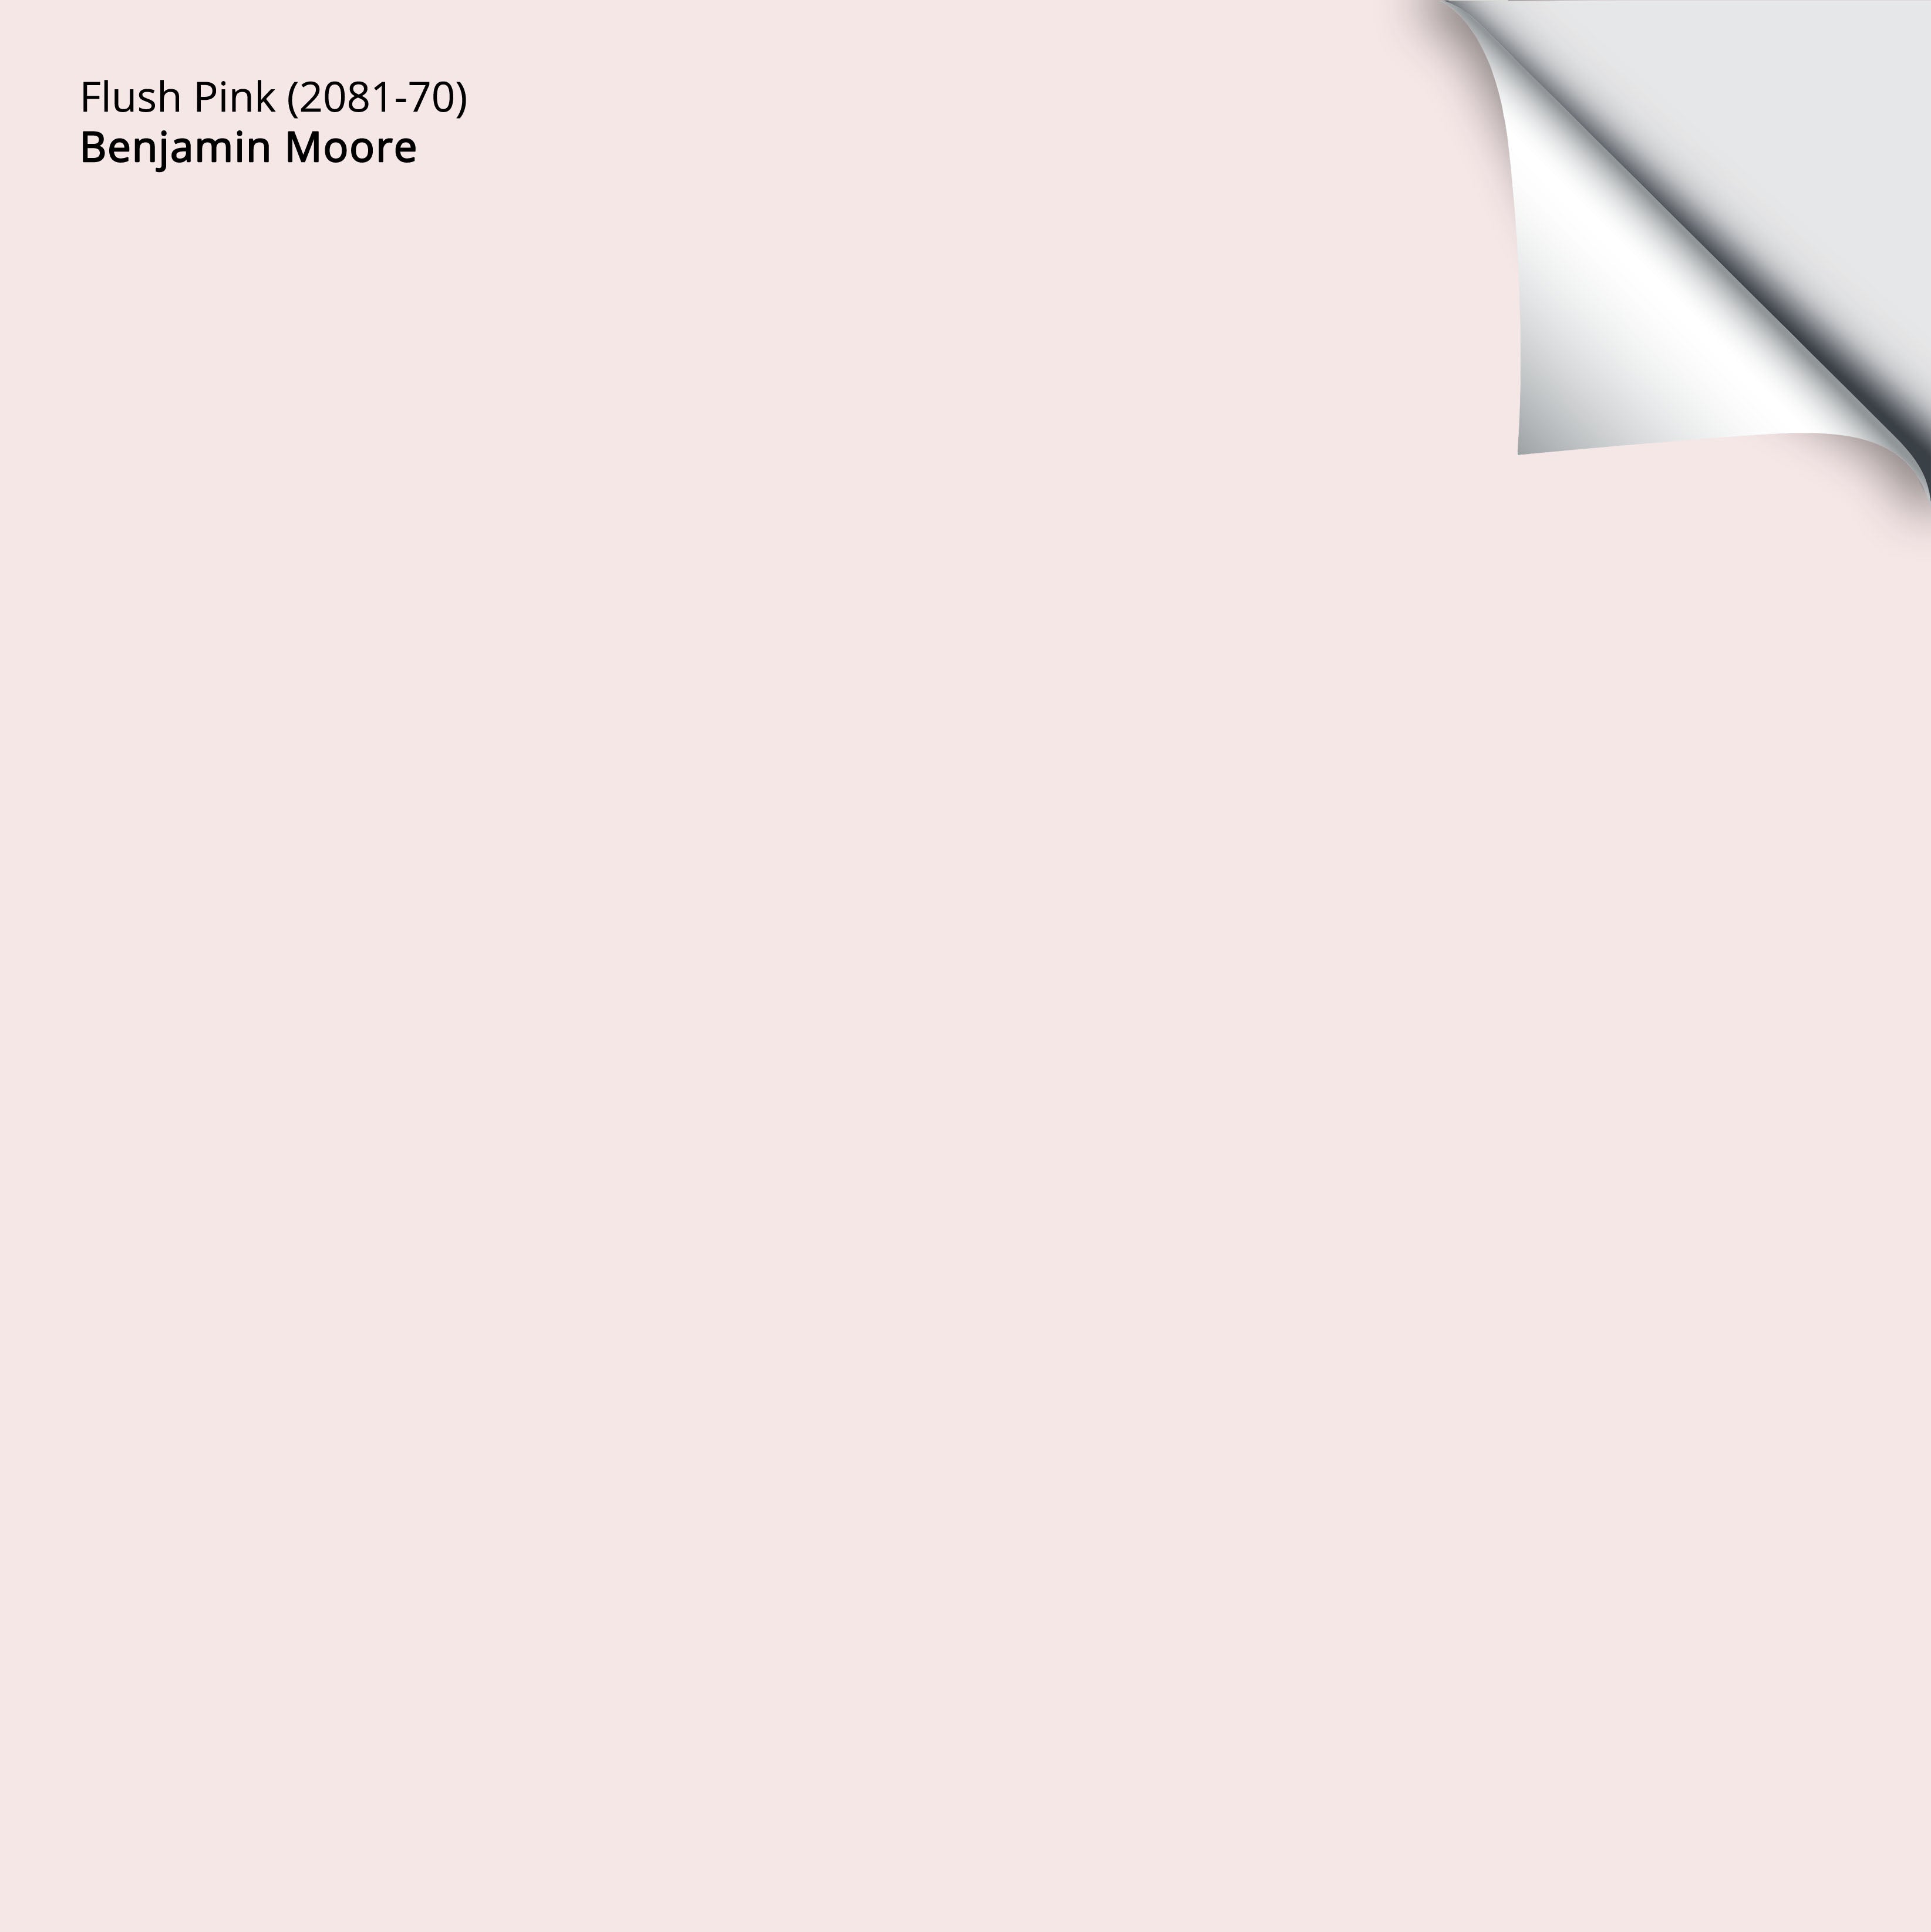 Flush Pink (2081-70): 9x14.75